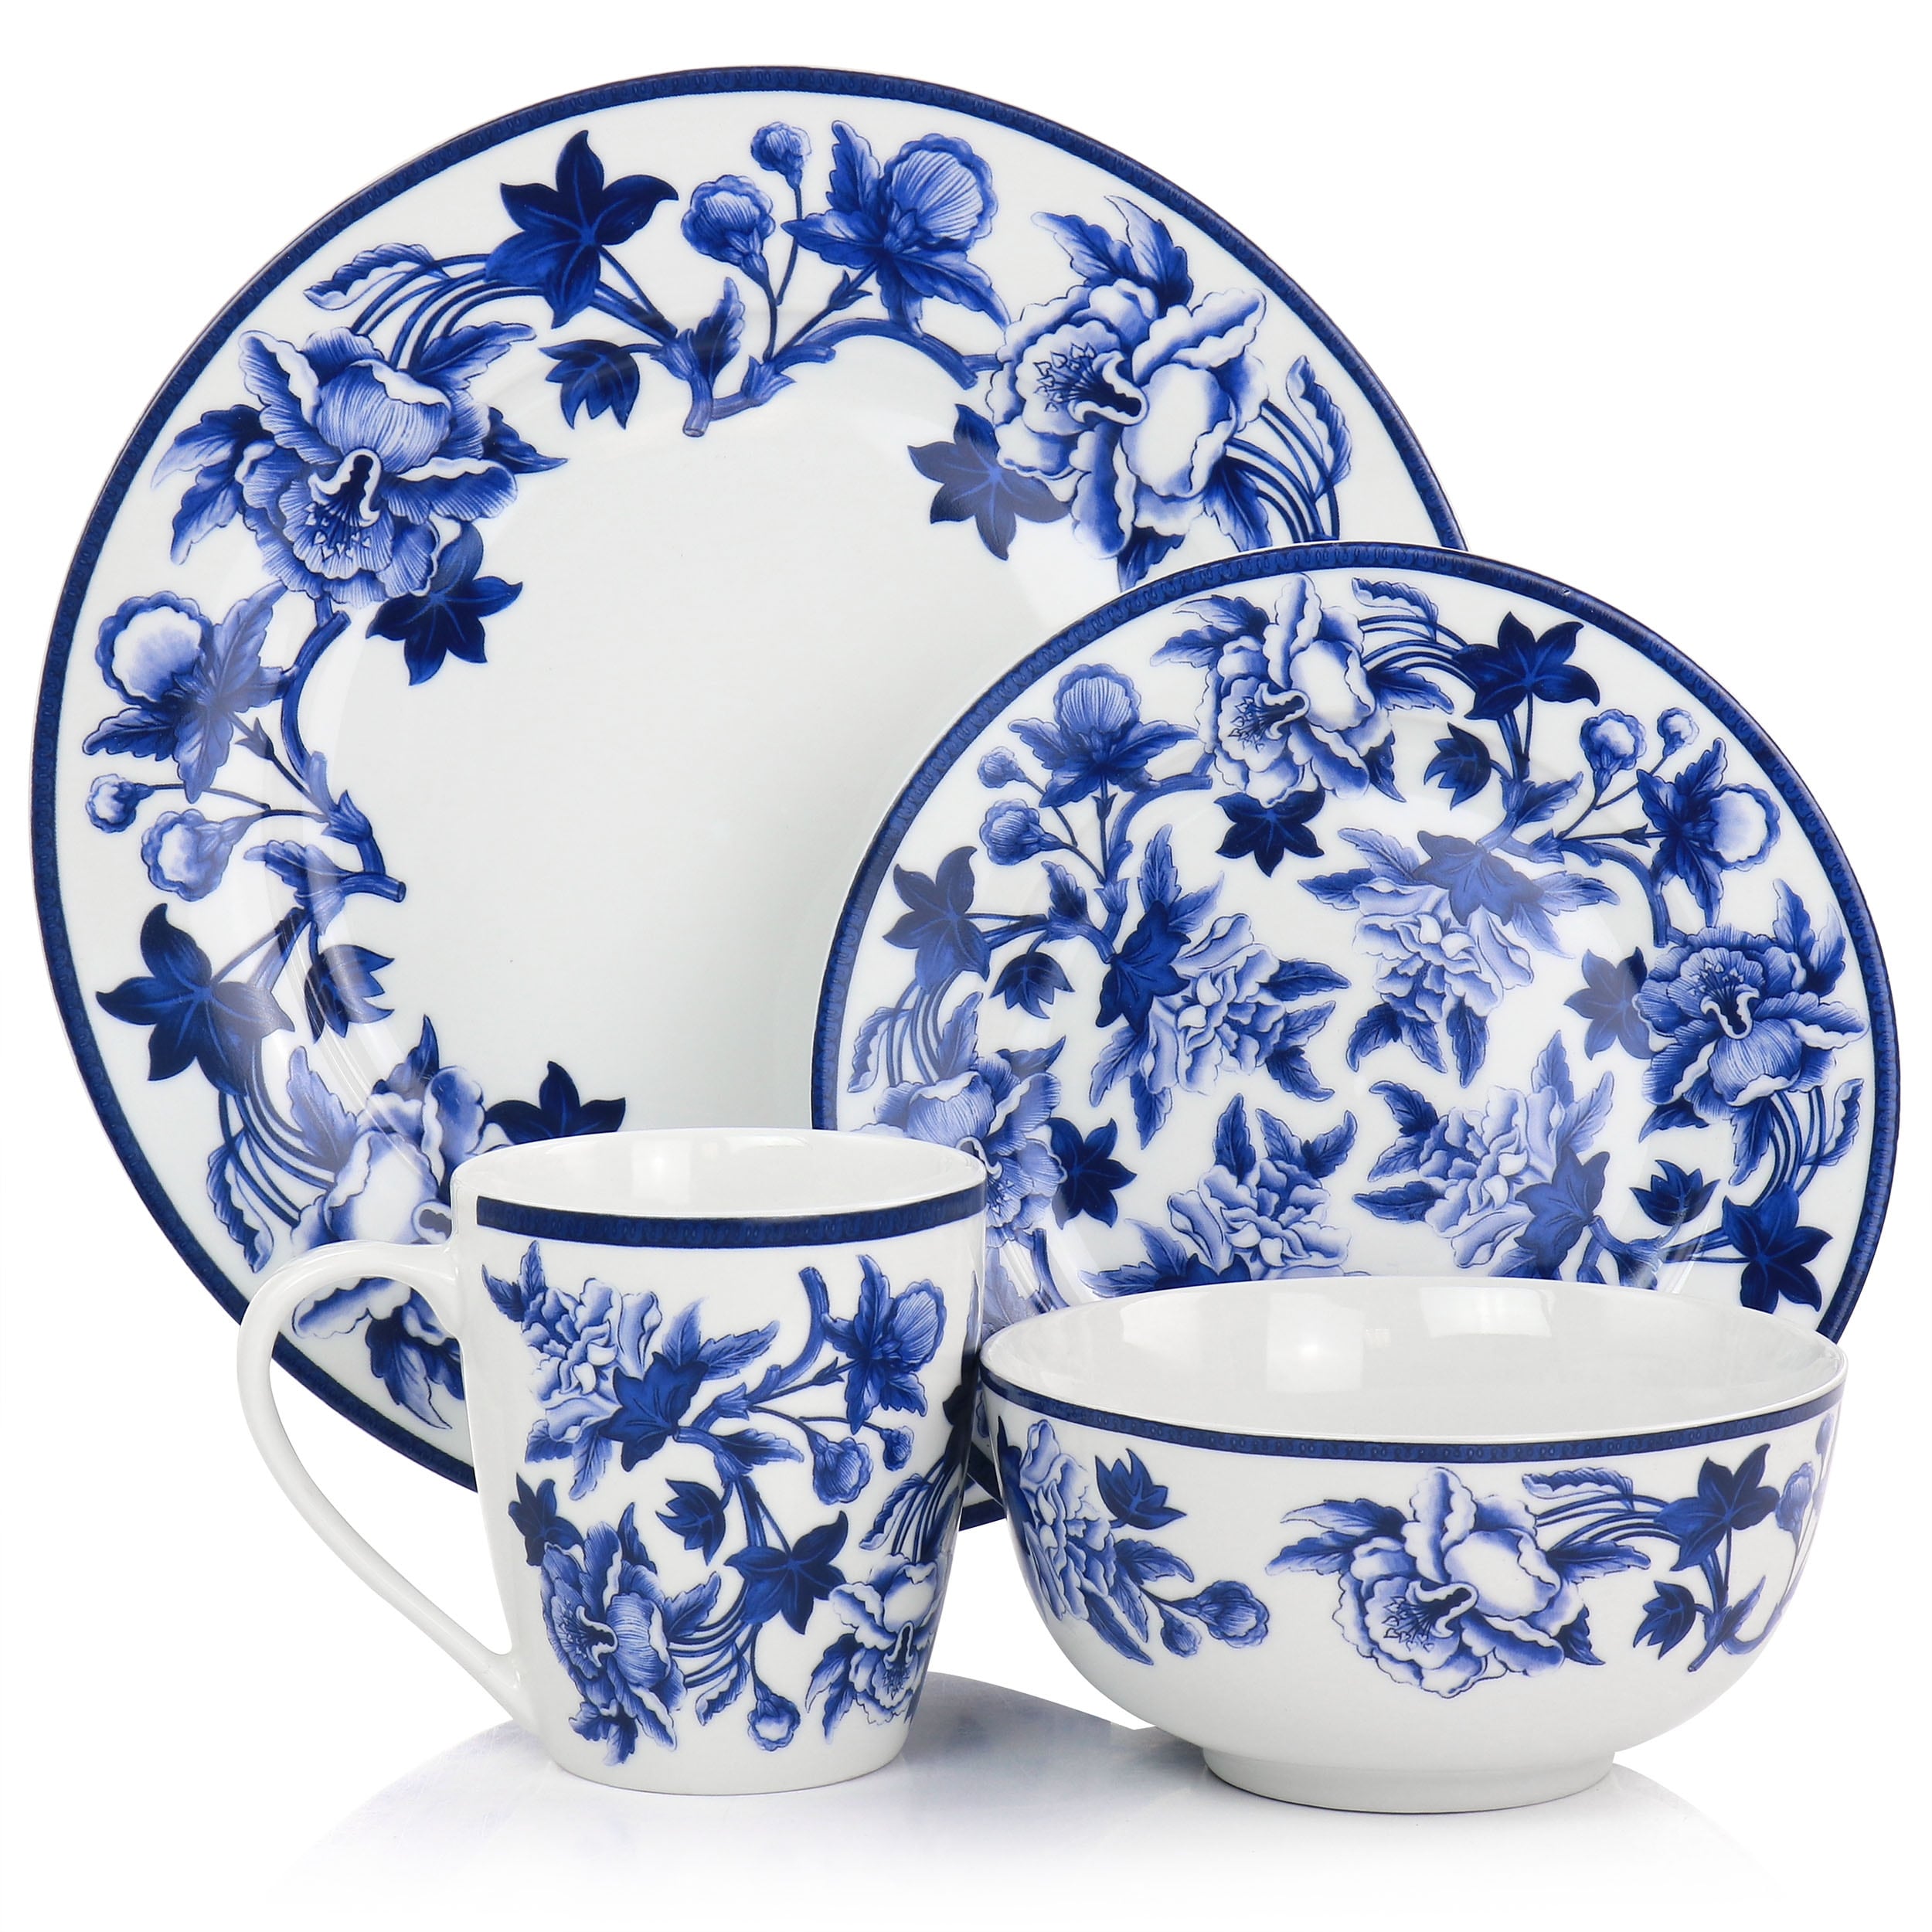 https://ak1.ostkcdn.com/images/products/is/images/direct/787d3daf70e16252a61f9c61f4152152c31cb177/Martha-Stewart-16pc-Blue-Vintage-Fine-Ceramic-Dinnerware-Set-in-Cobalt.jpg